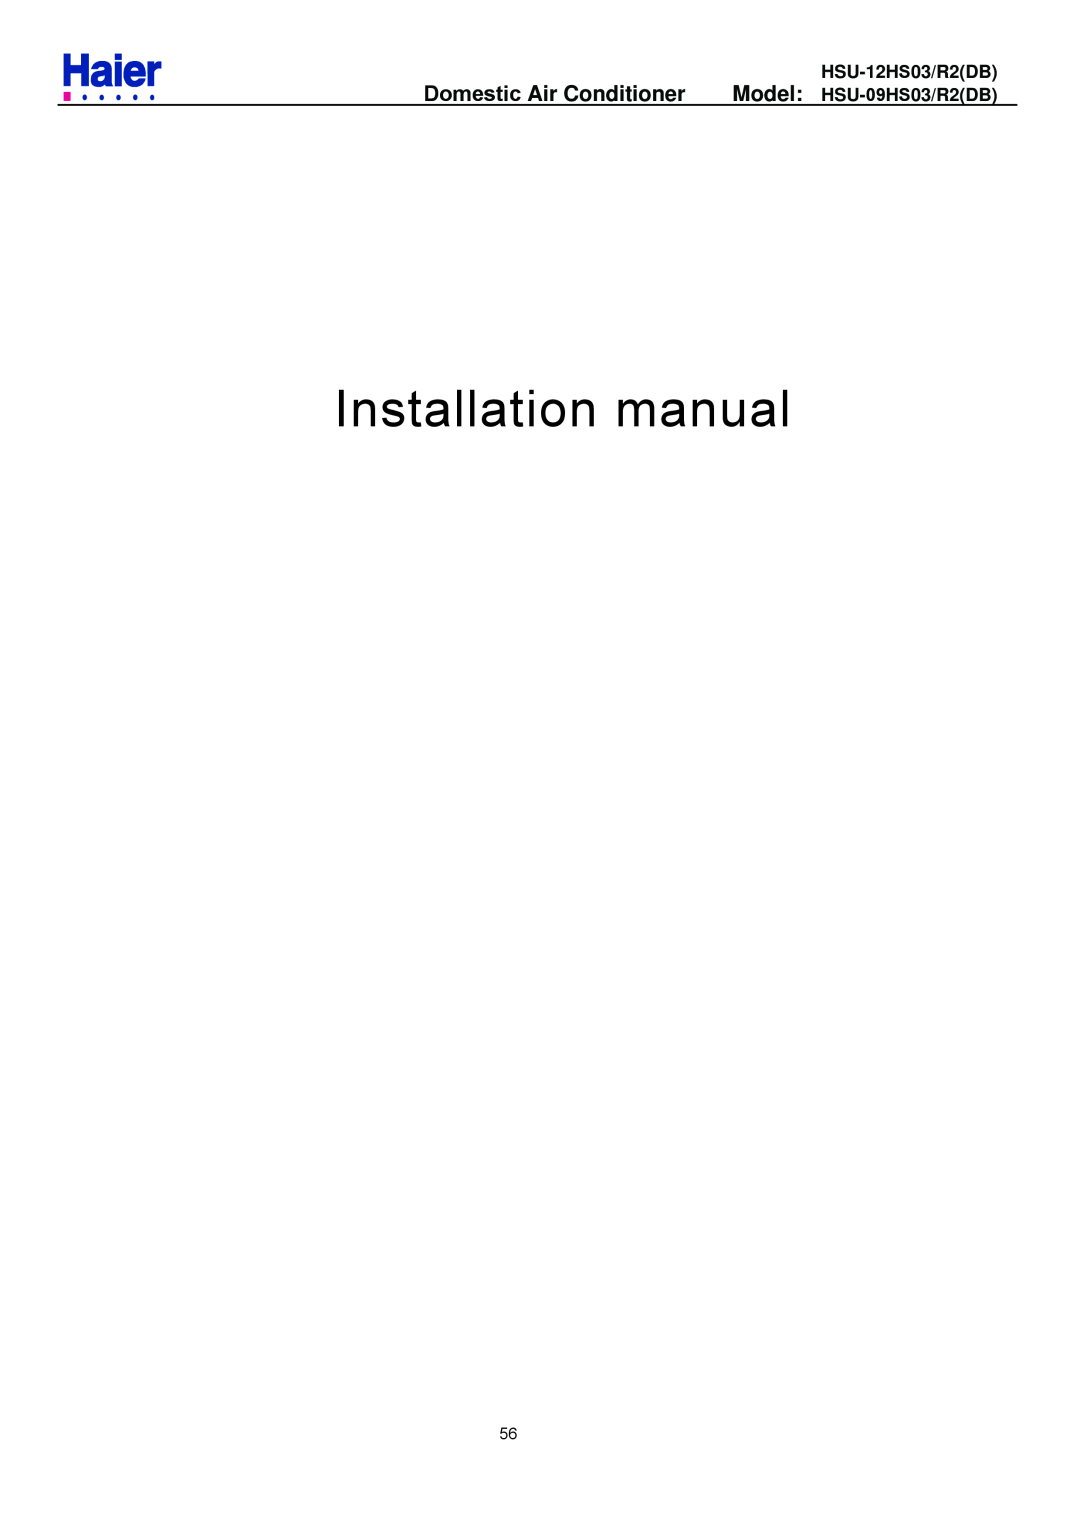 Haier service manual Installation manual, Domestic Air Conditioner, HSU-12HS03/R2DB, Model HSU-09HS03/R2DB 